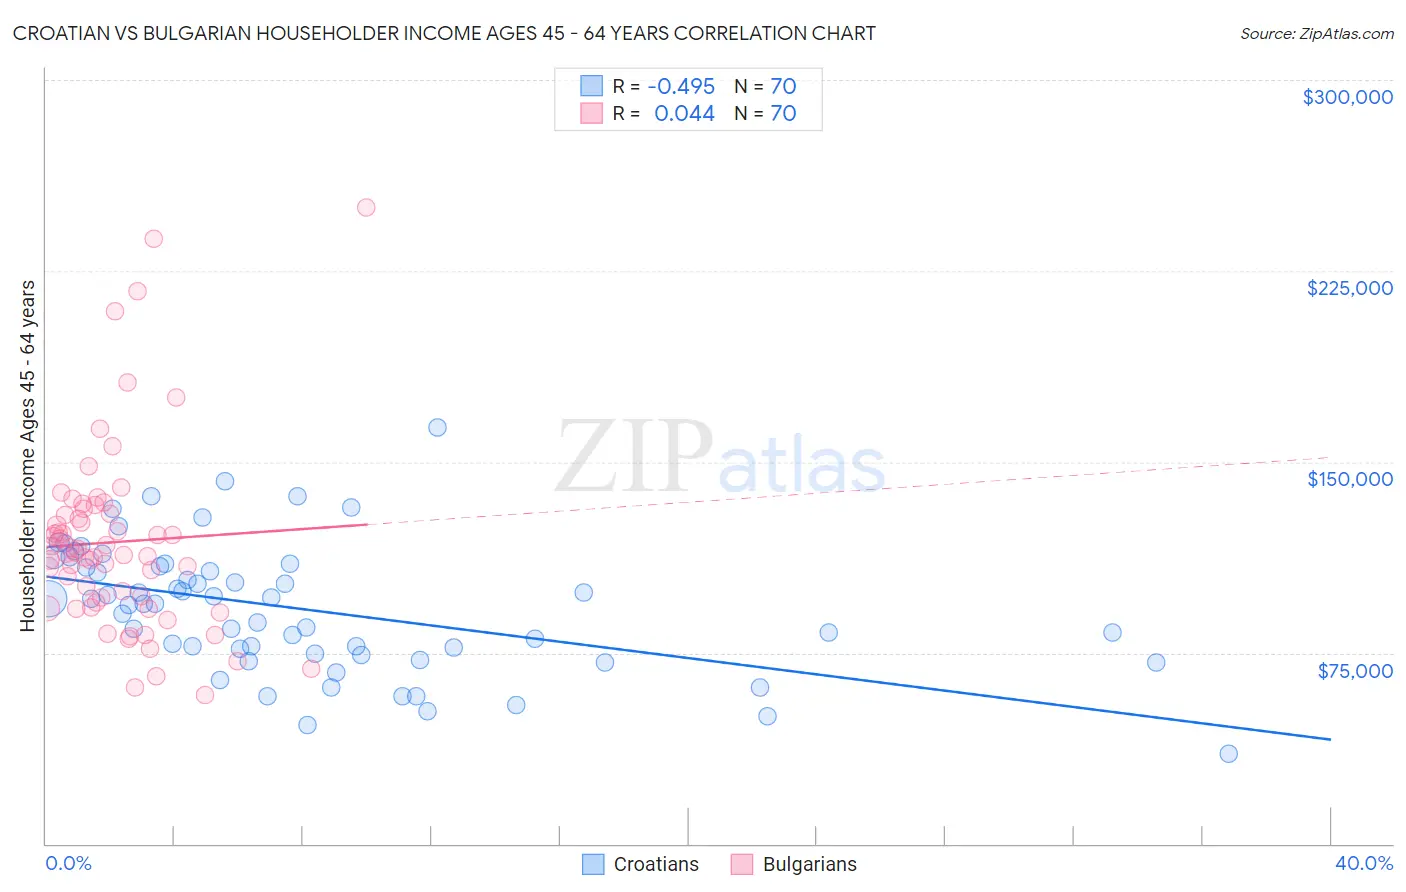 Croatian vs Bulgarian Householder Income Ages 45 - 64 years